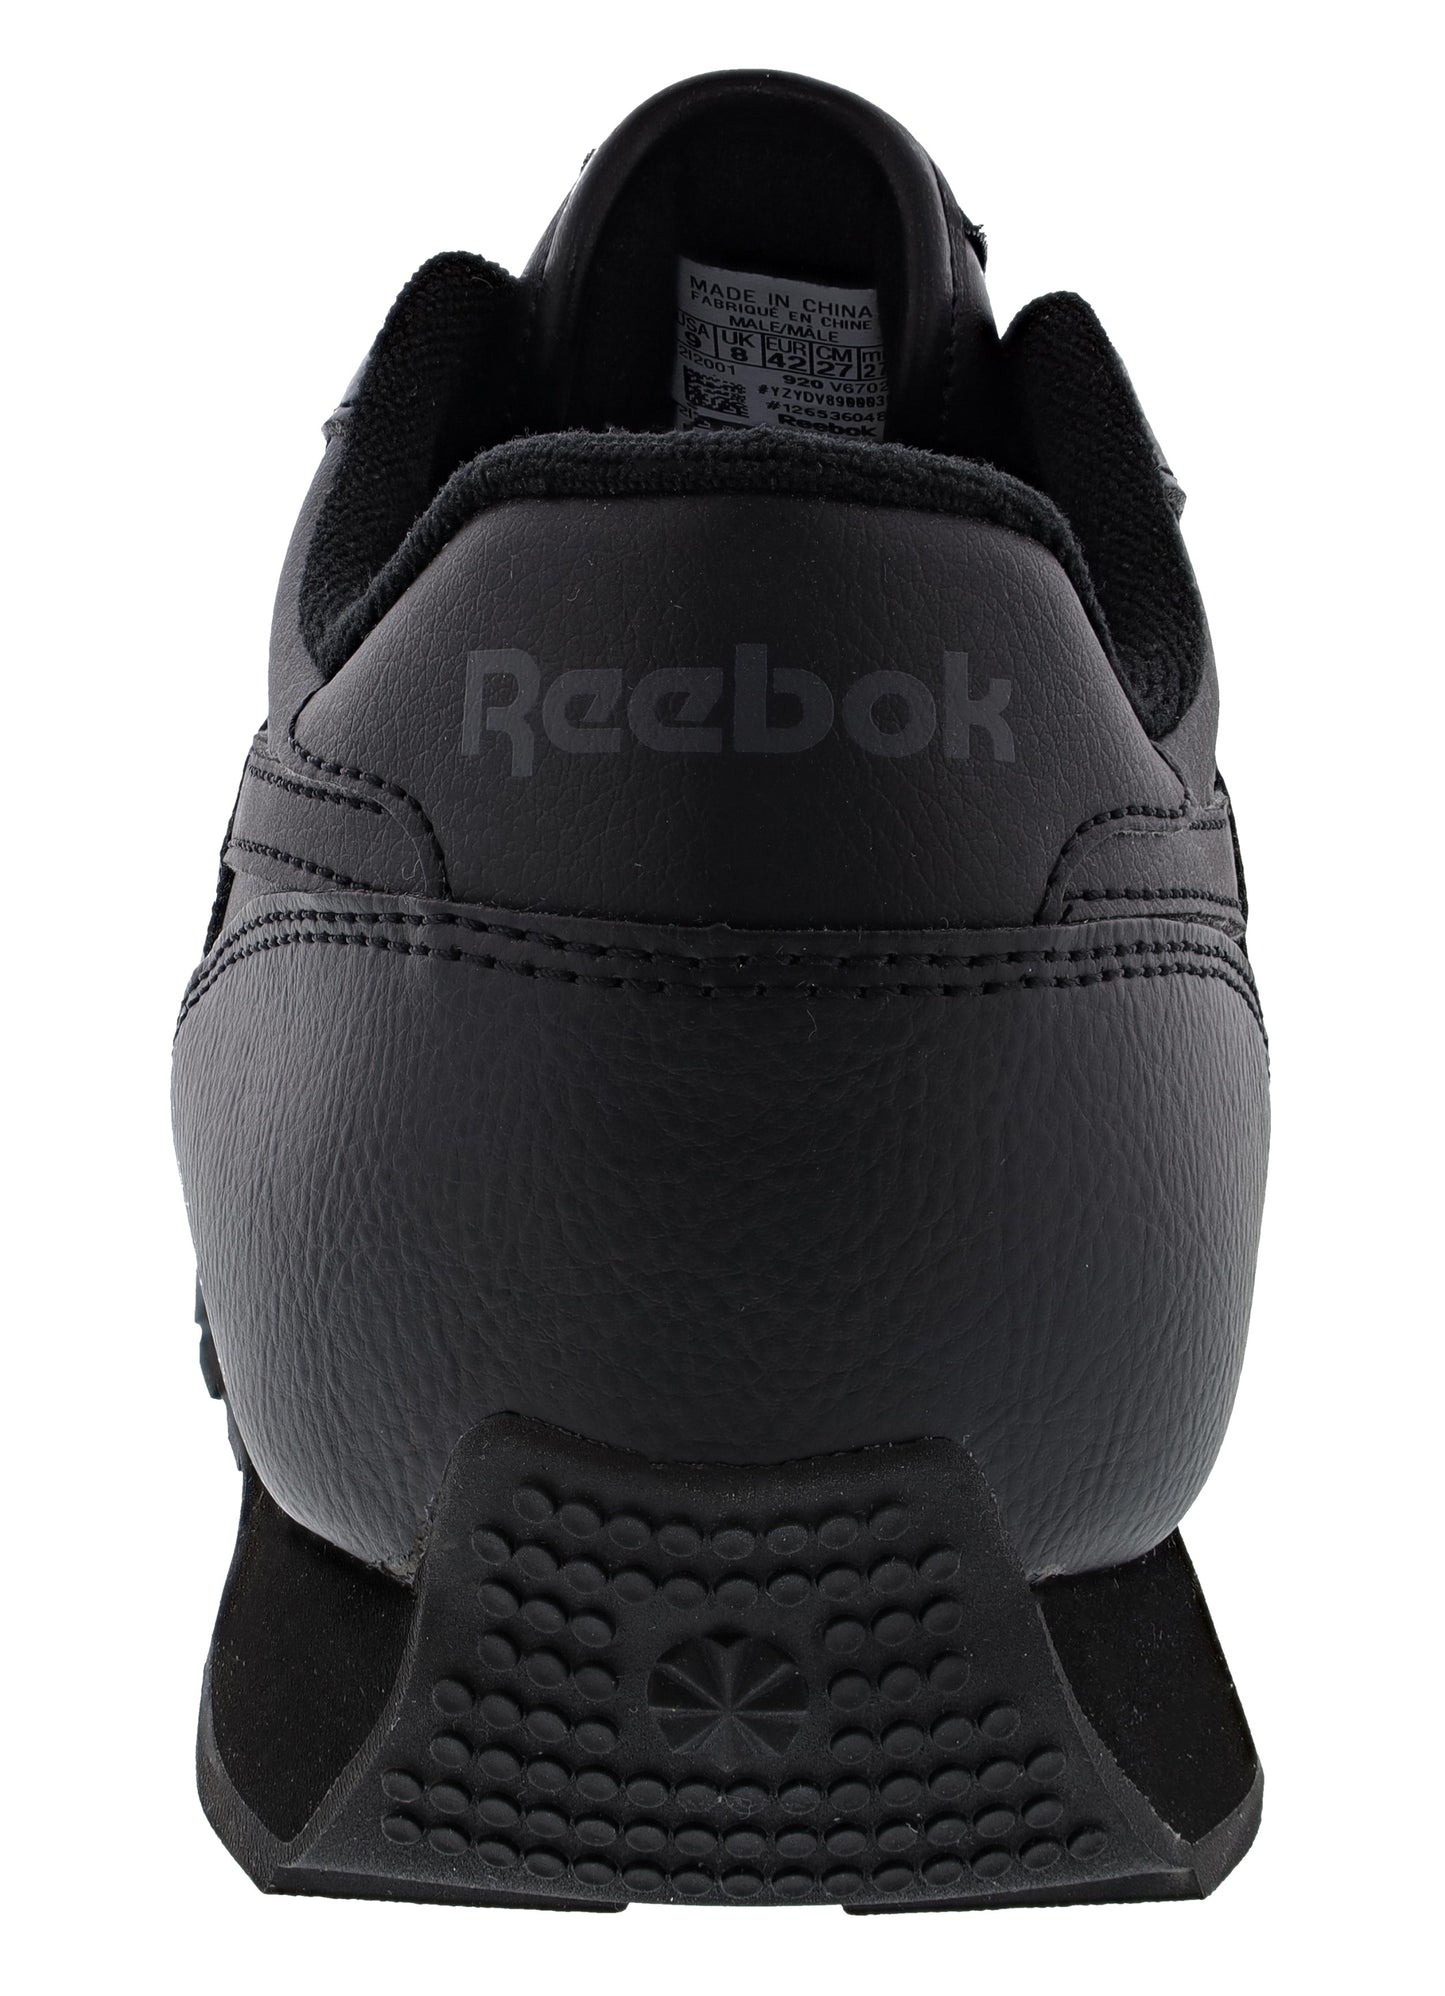 
                  
                    Reebok Men's Classic Renaissance Comfort Walking Shoes
                  
                